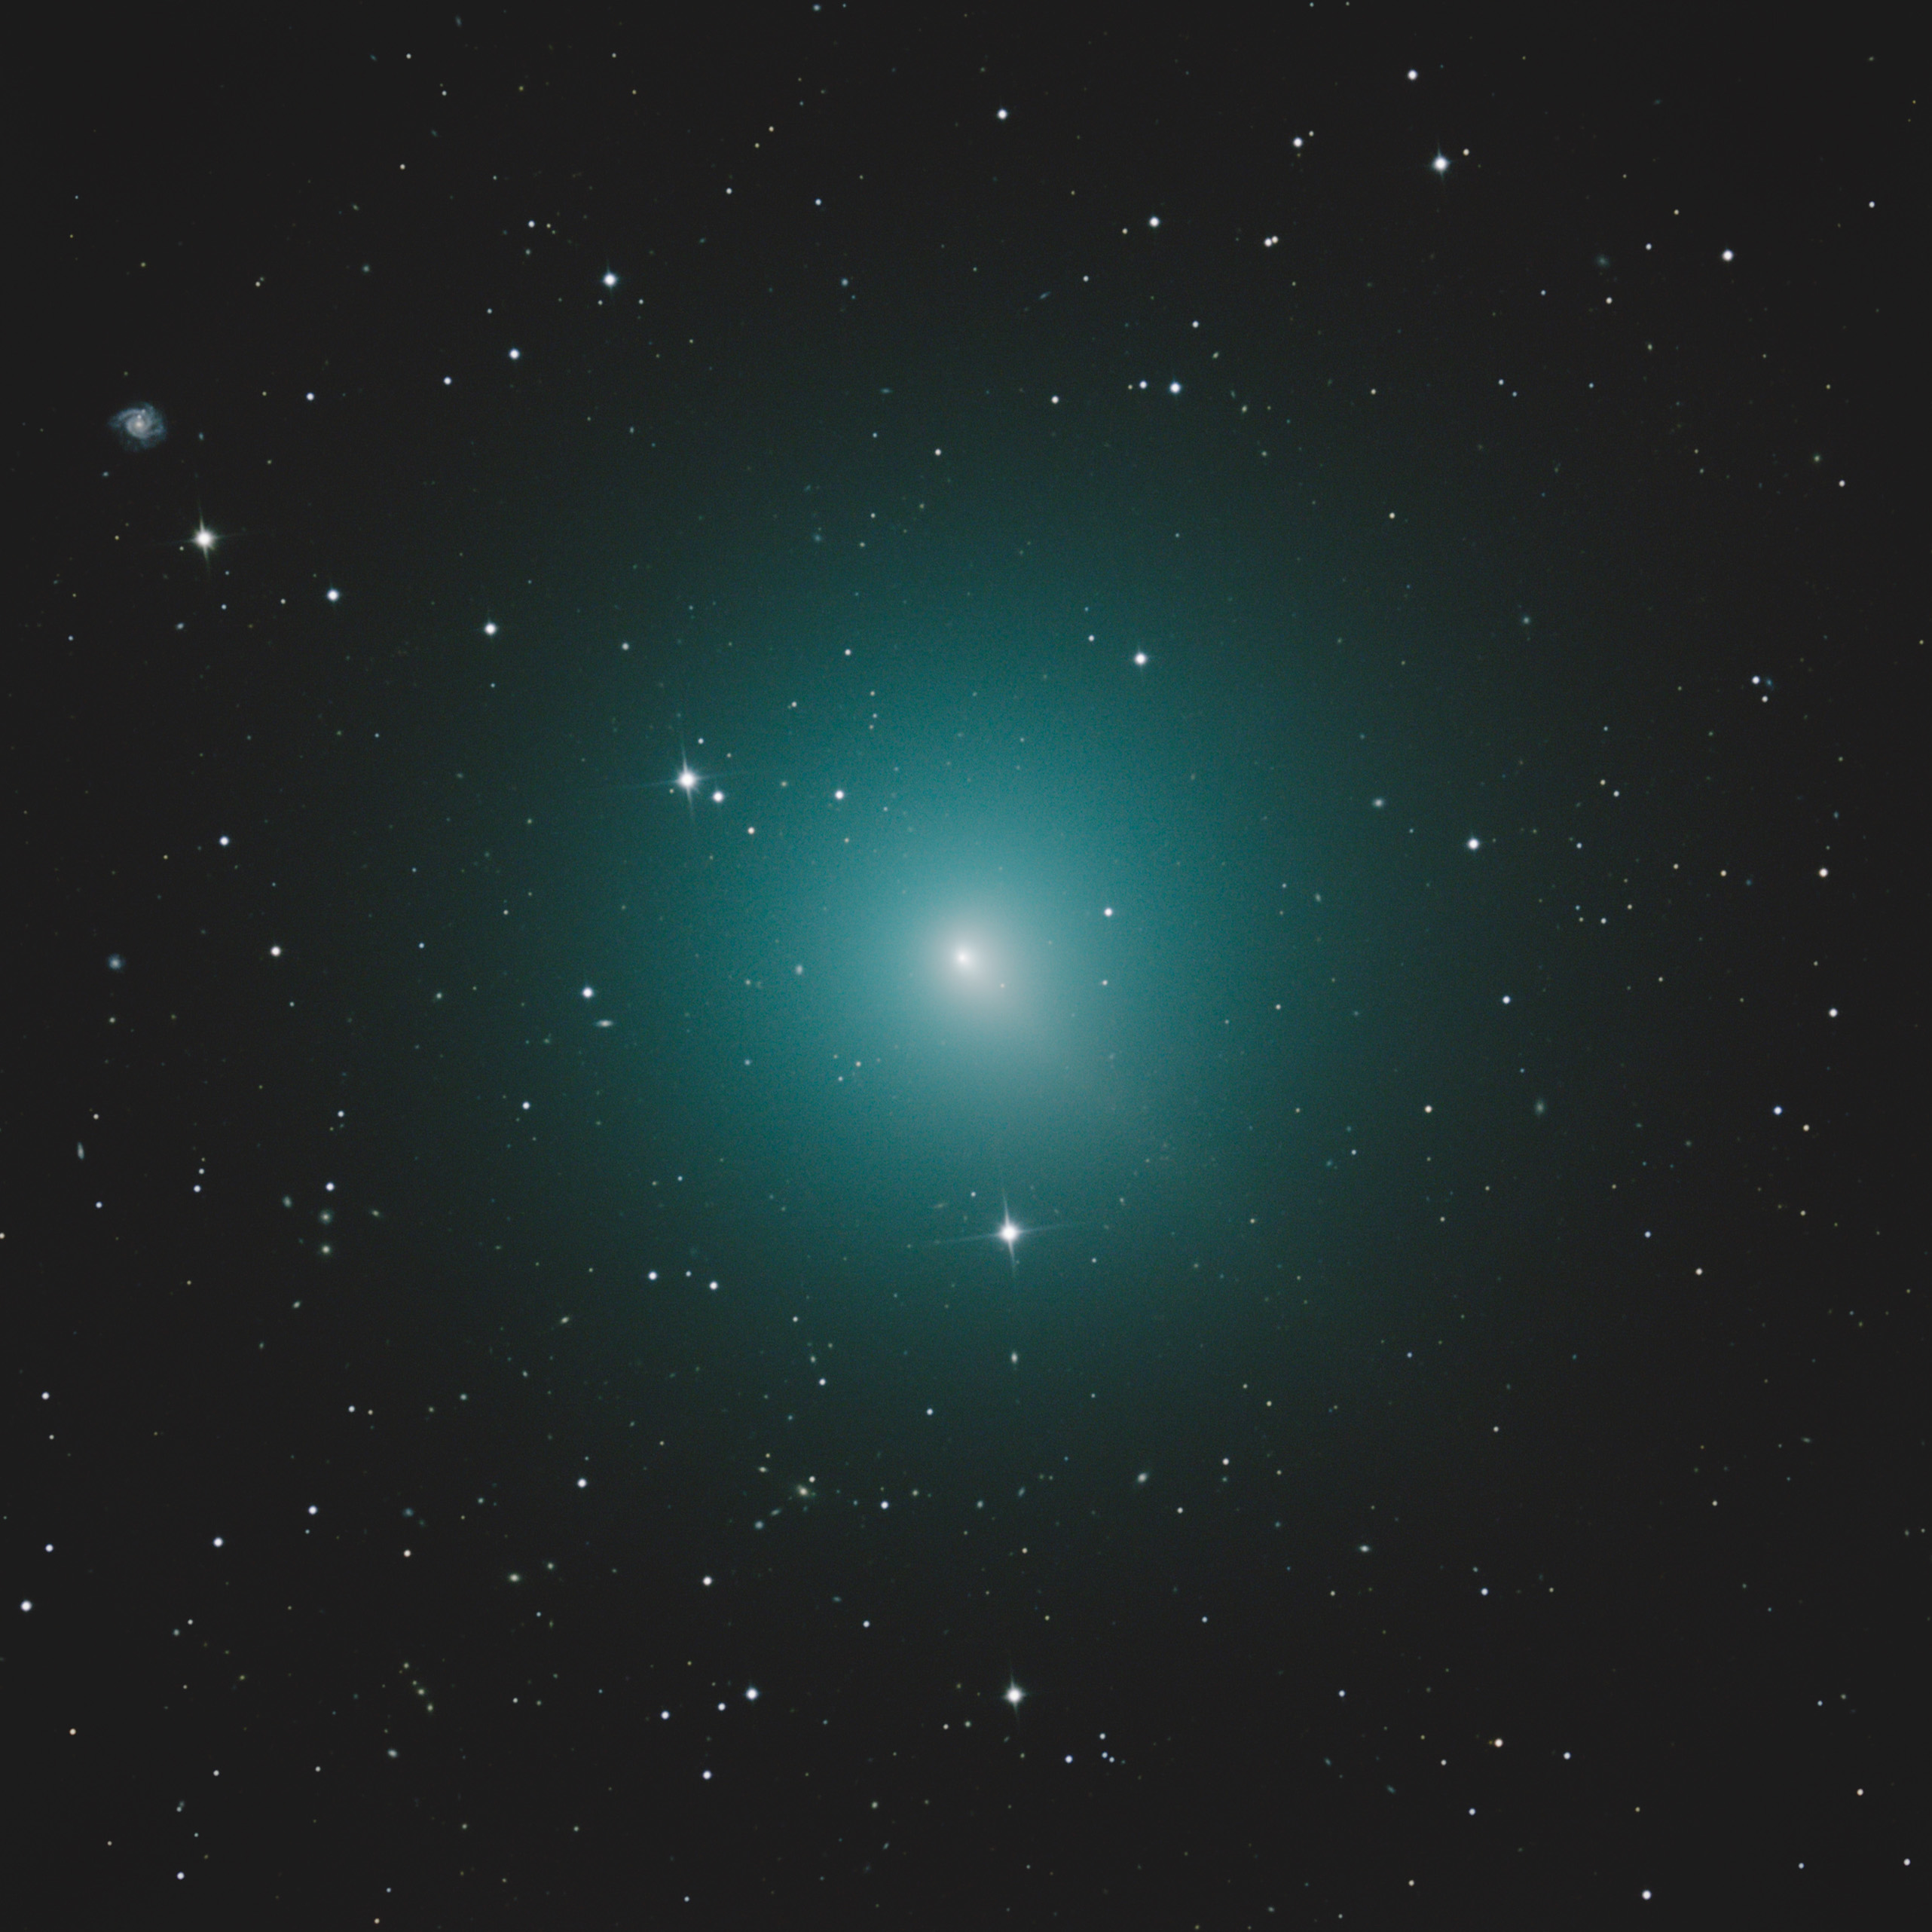 La comète 46P / Wirtanen